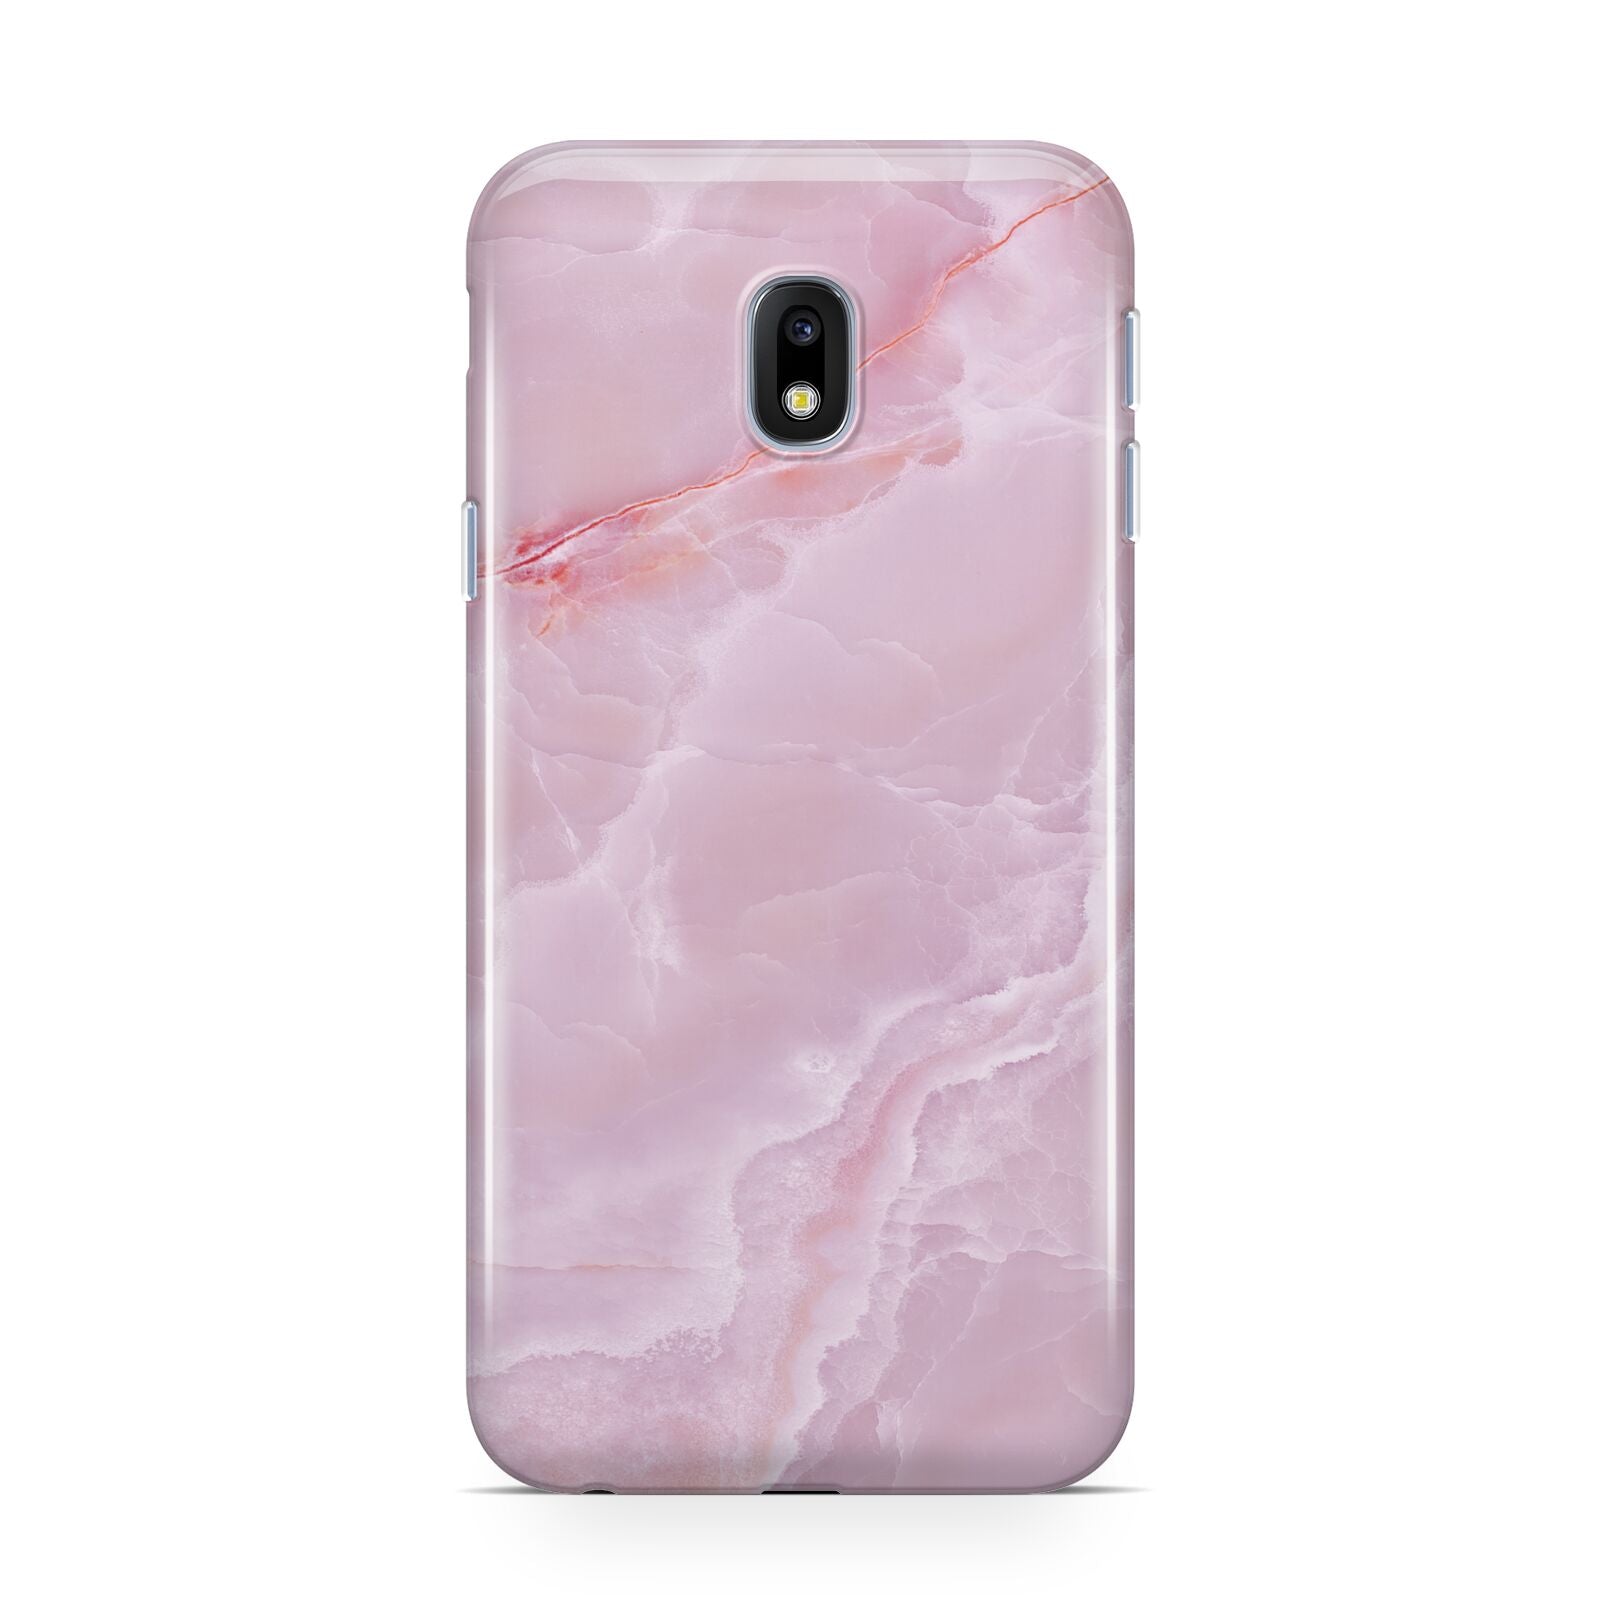 Dreamy Pink Marble Samsung Galaxy J3 2017 Case